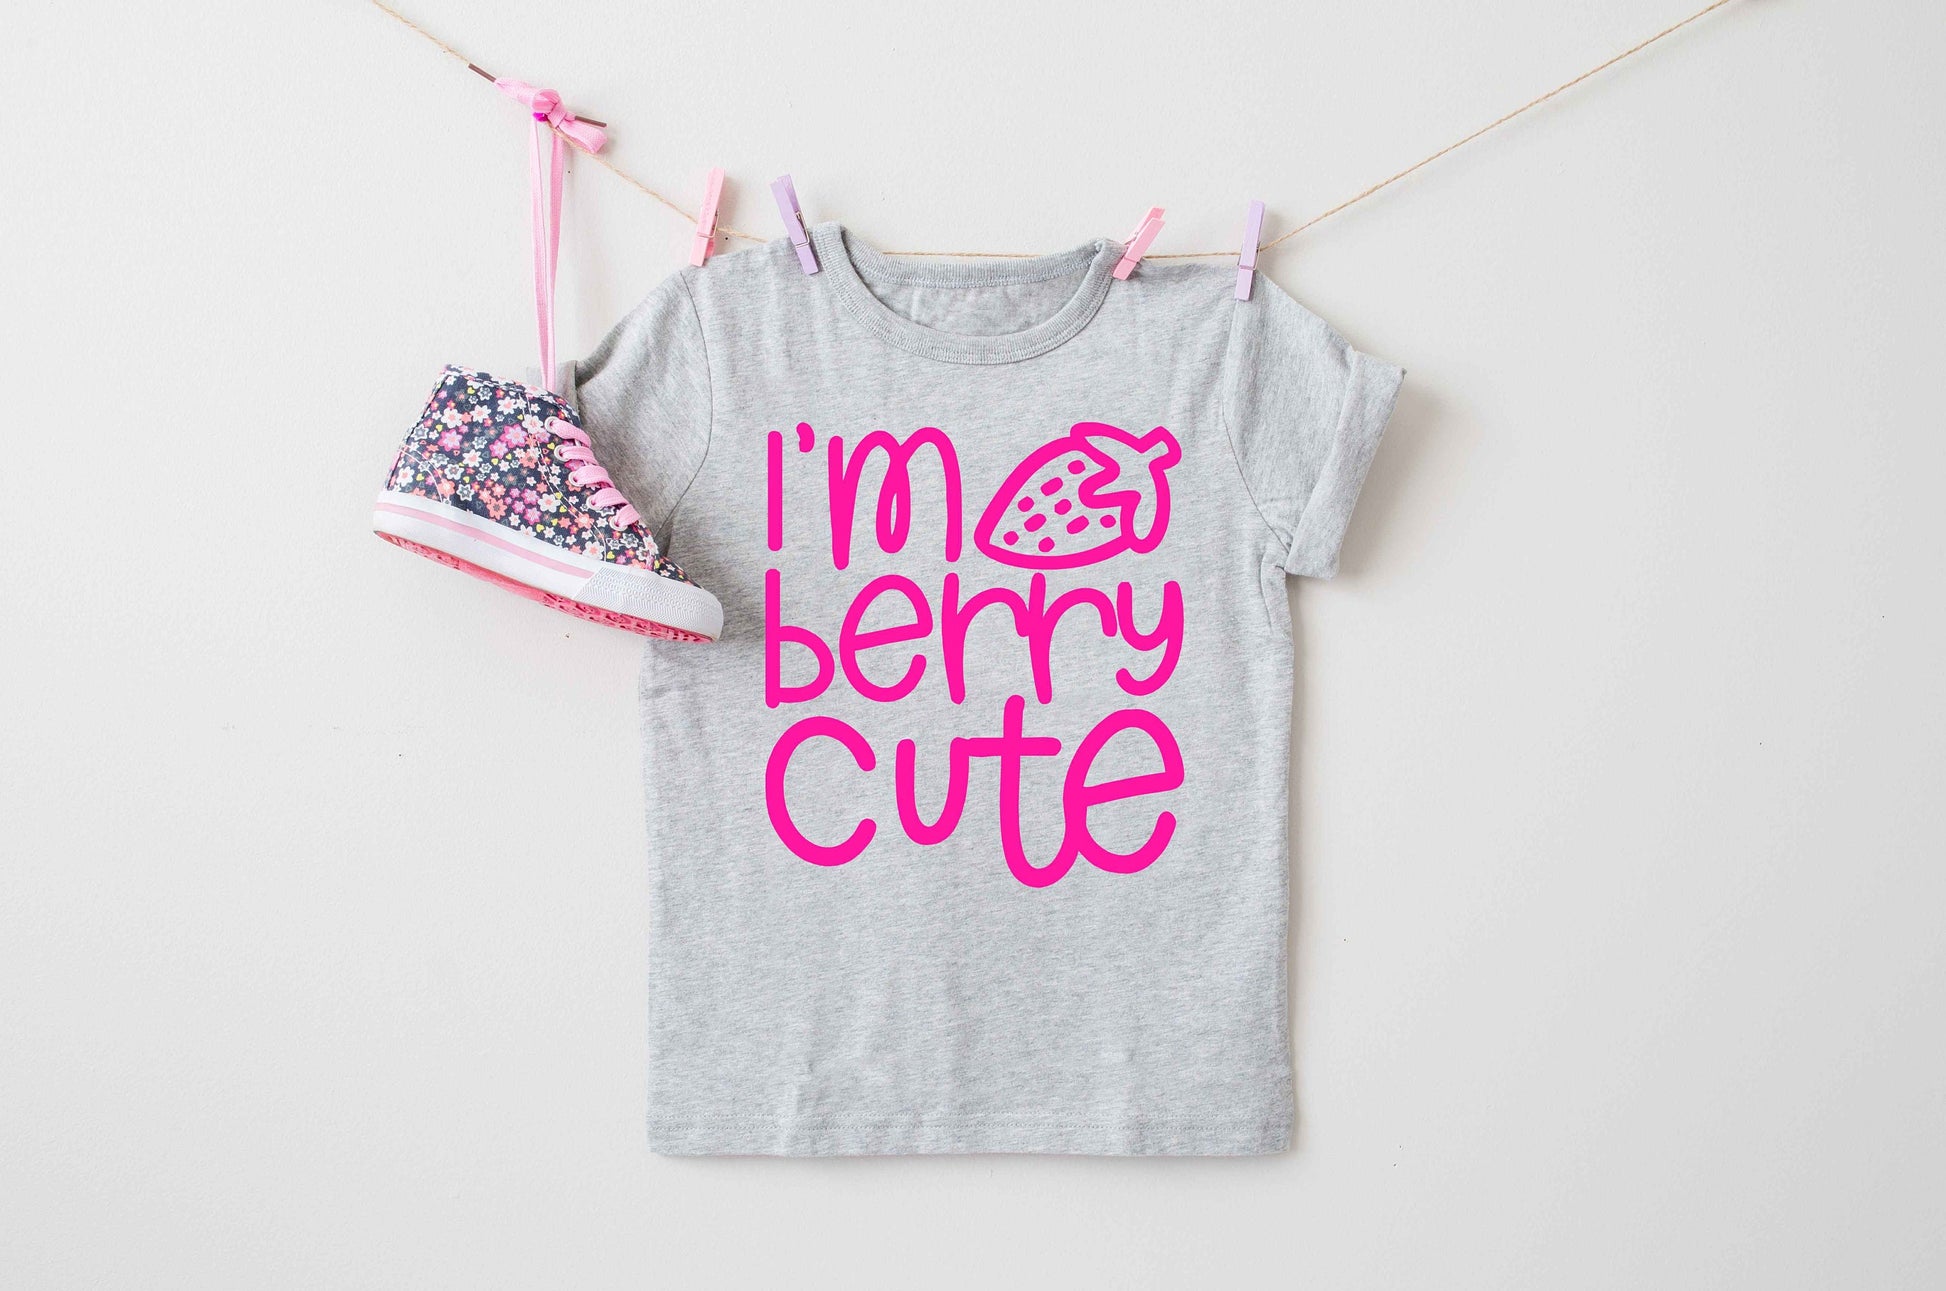 I'm Berry Cute Kids Bodysuit or T-Shirt - Strawberry Shirt, Cute Girls T-Shirt, Summer Shirt for Girls